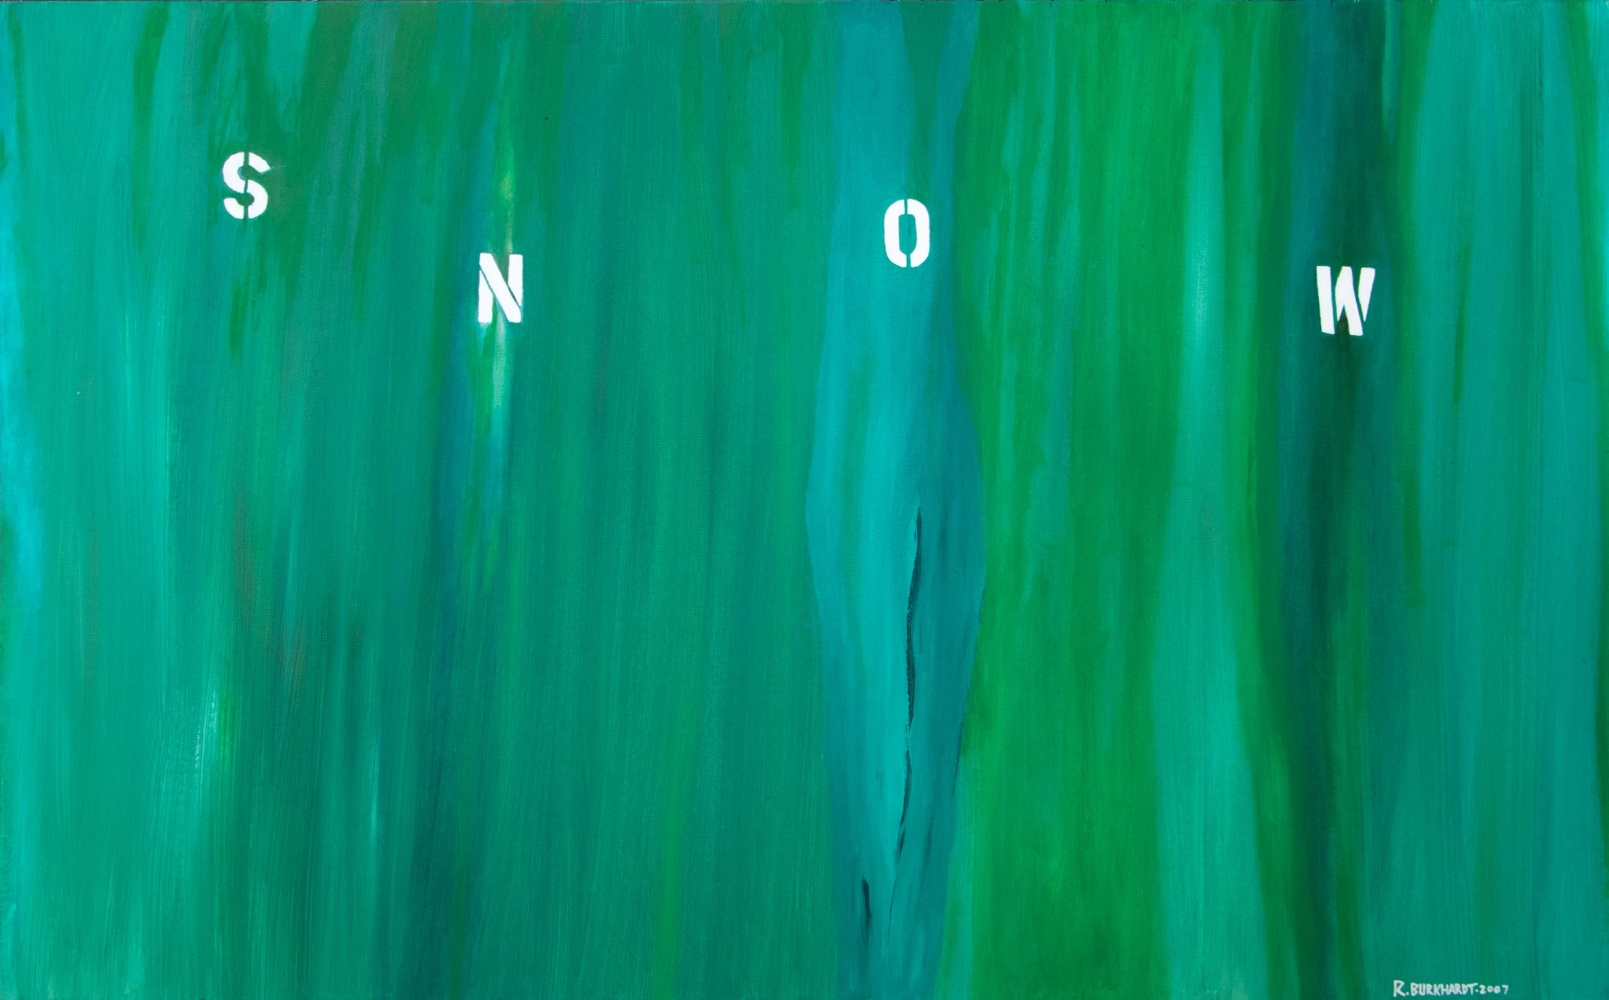 Ron Burkhardt, ECO-SERIES- "Snow" 2007. Oil on Canvas. 30 x 48 inches